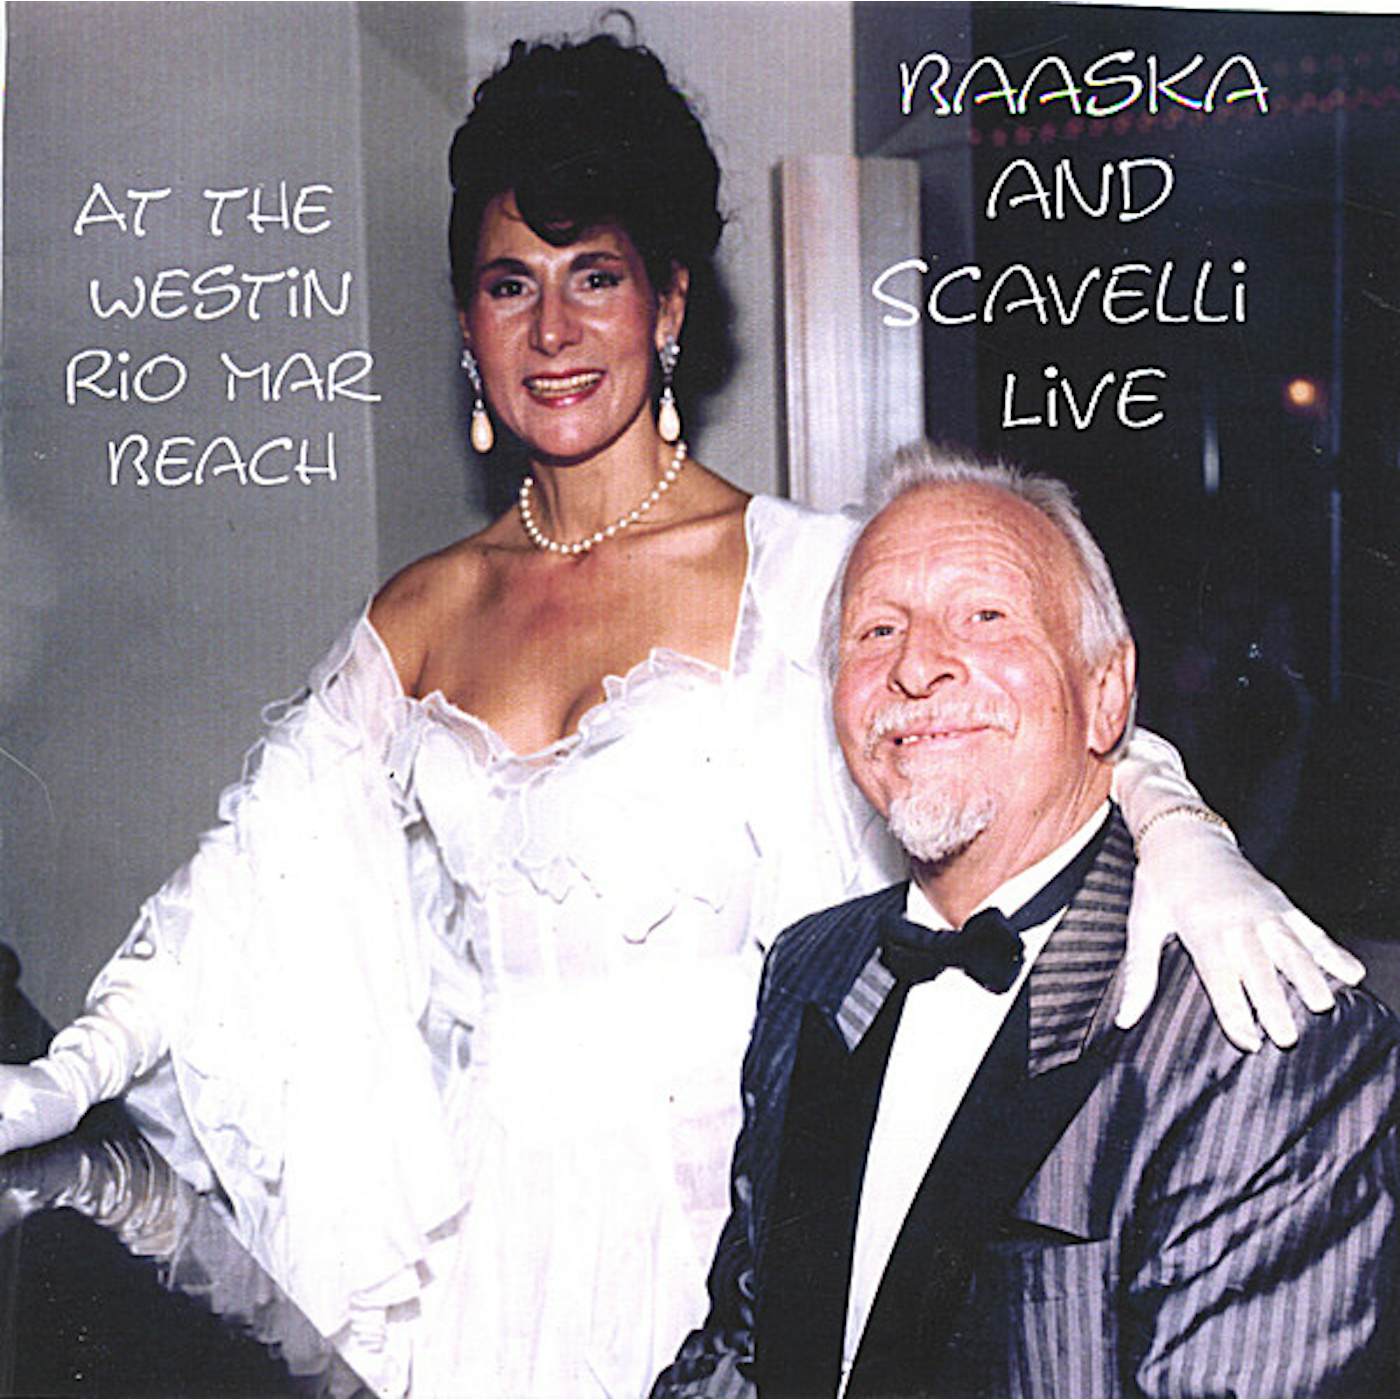 Baaska & Scavelli LIVE AT THE WESTIN RIO MAR BEACH CD